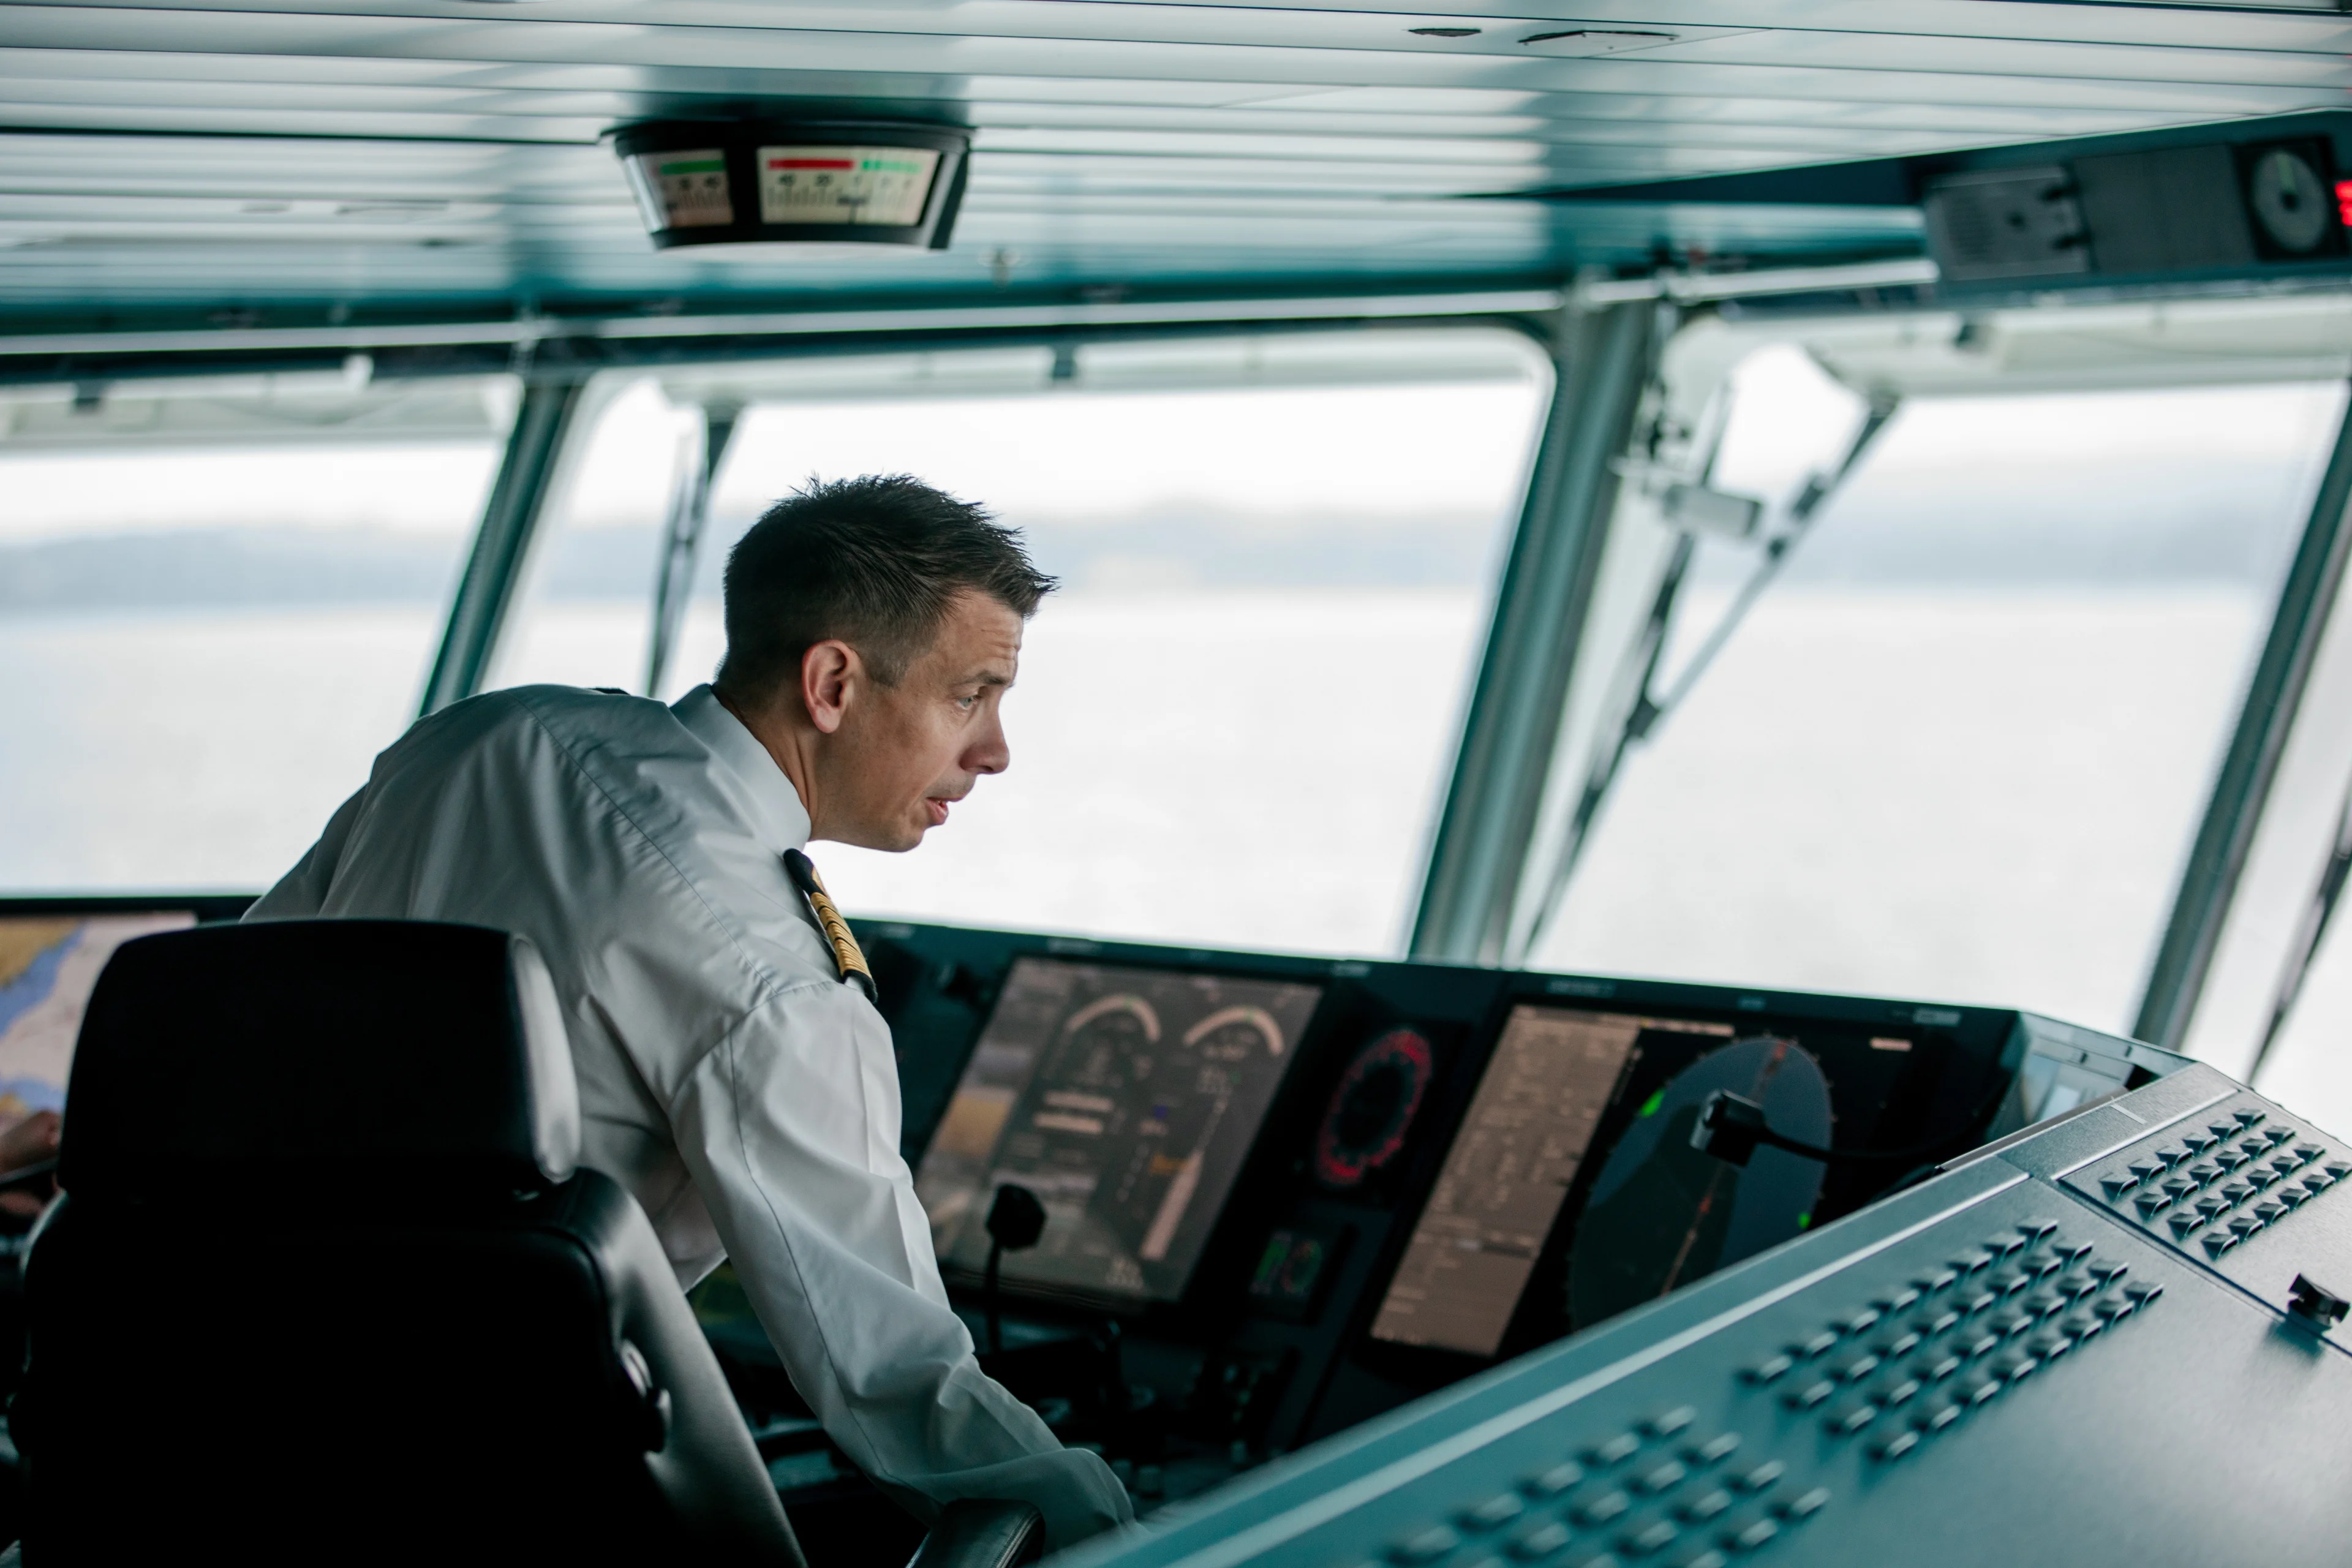 Captain Ingar Lorentsen on the bridge onboard MS Maud - Photo Credit: Tom Woodstock